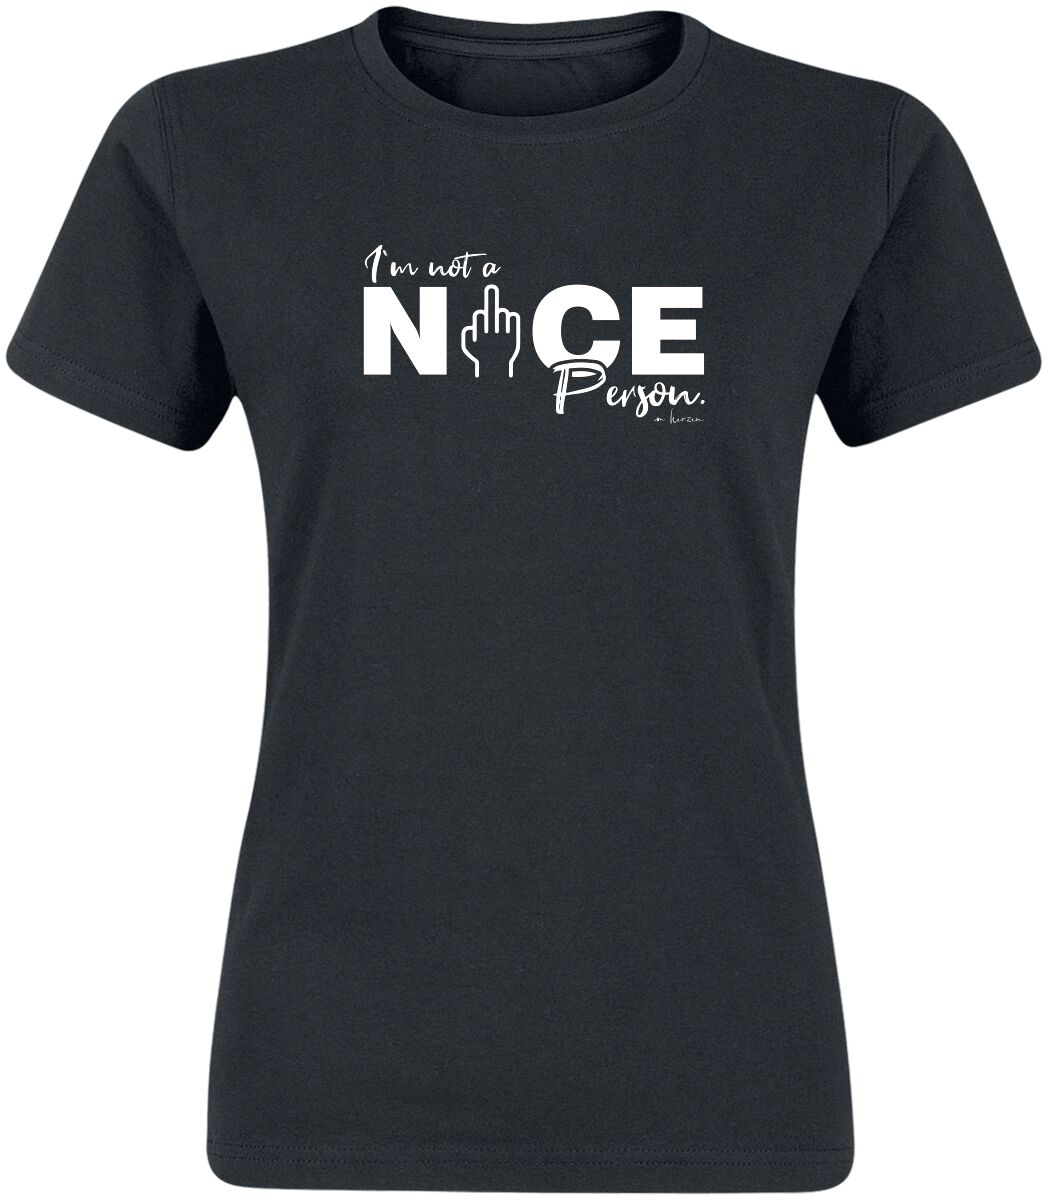 Slogans I'm Not A Nice Person T-Shirt black